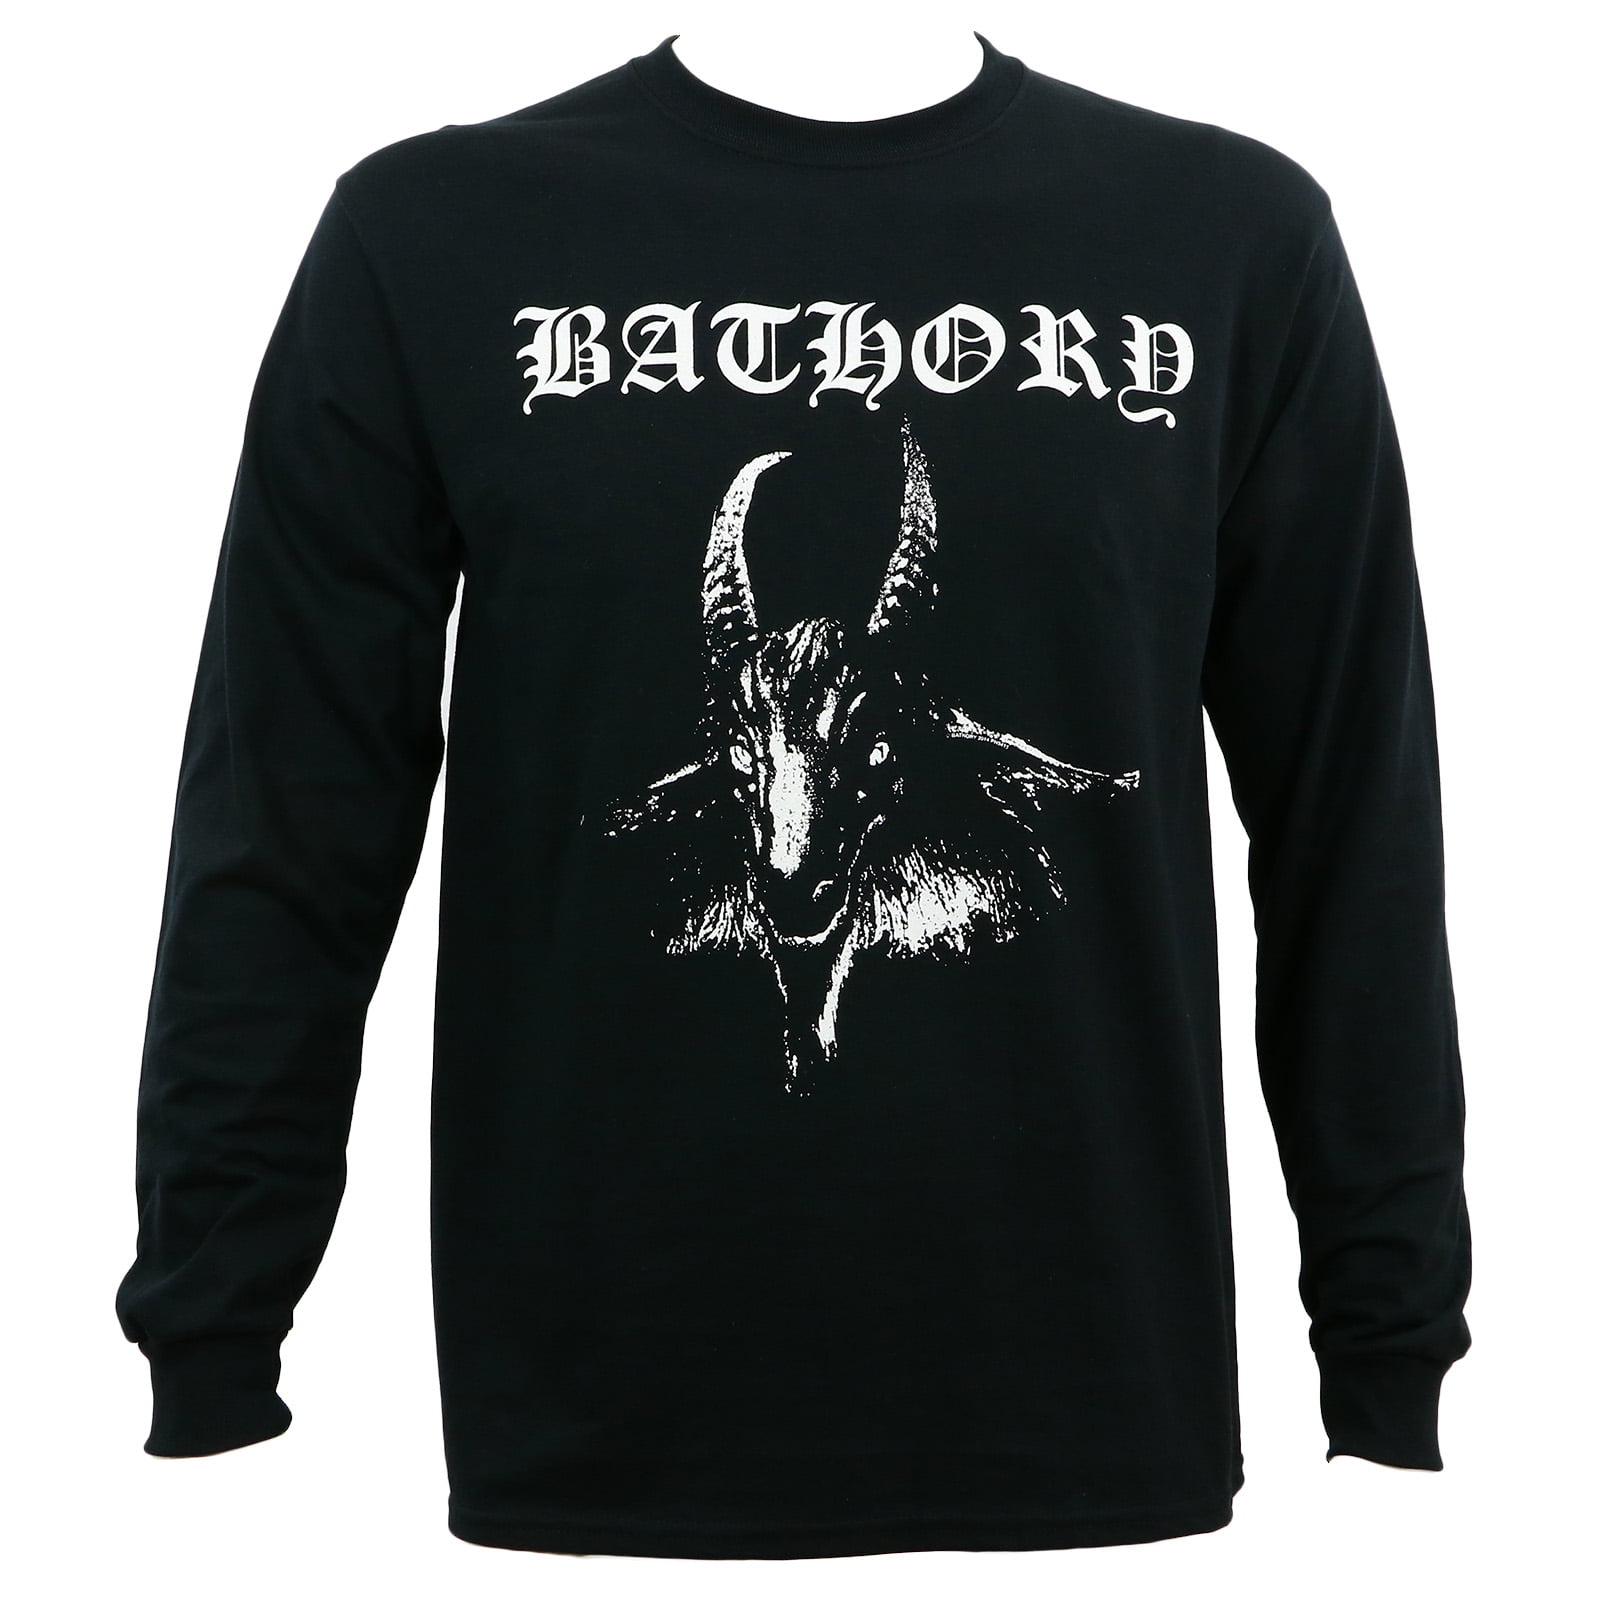 NEW Bathory 'Under The Sign' Long Sleeve T shirt 